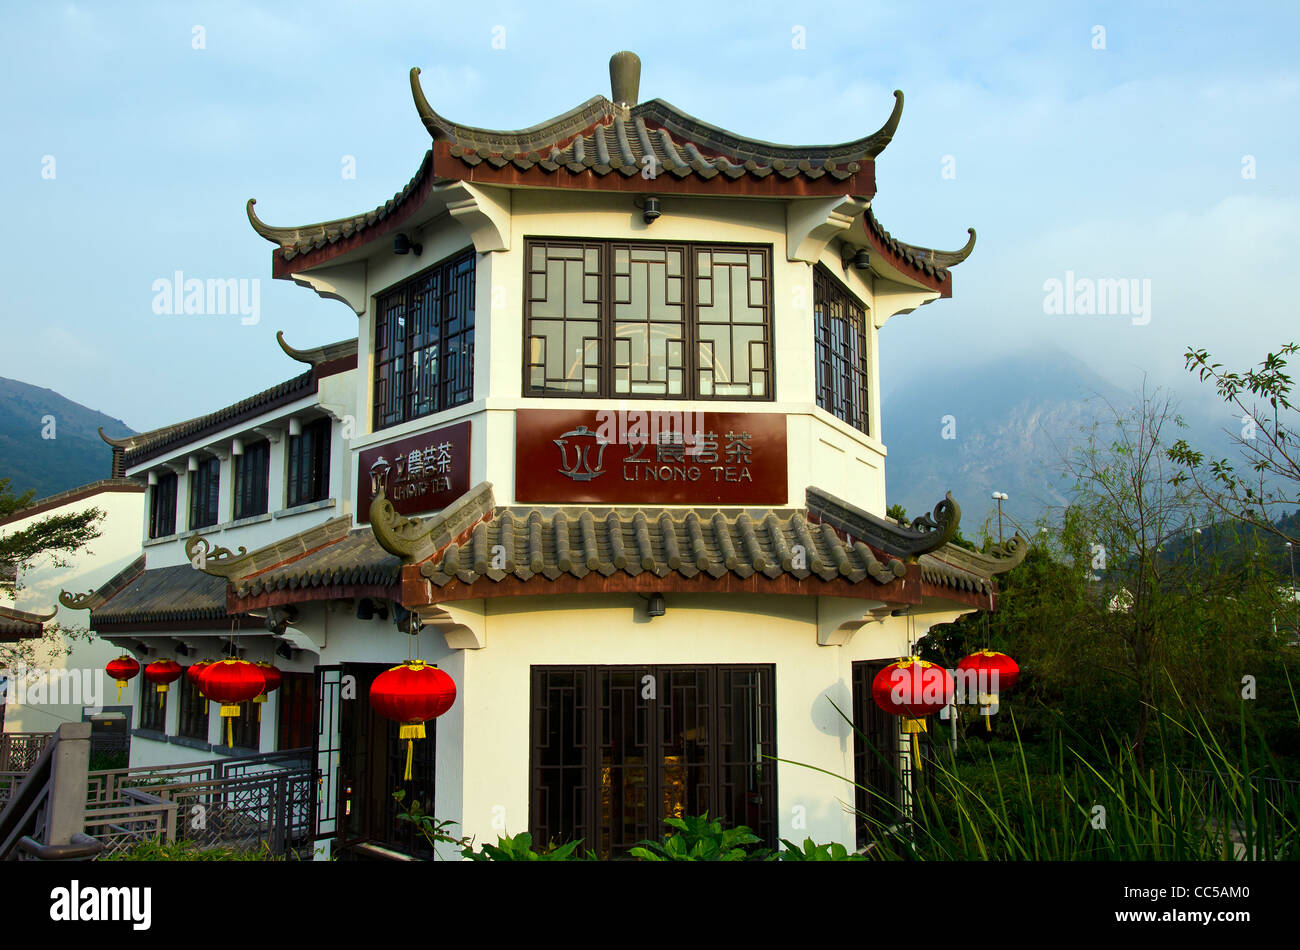 Linong Tea House in Hong Kong Stock Photo